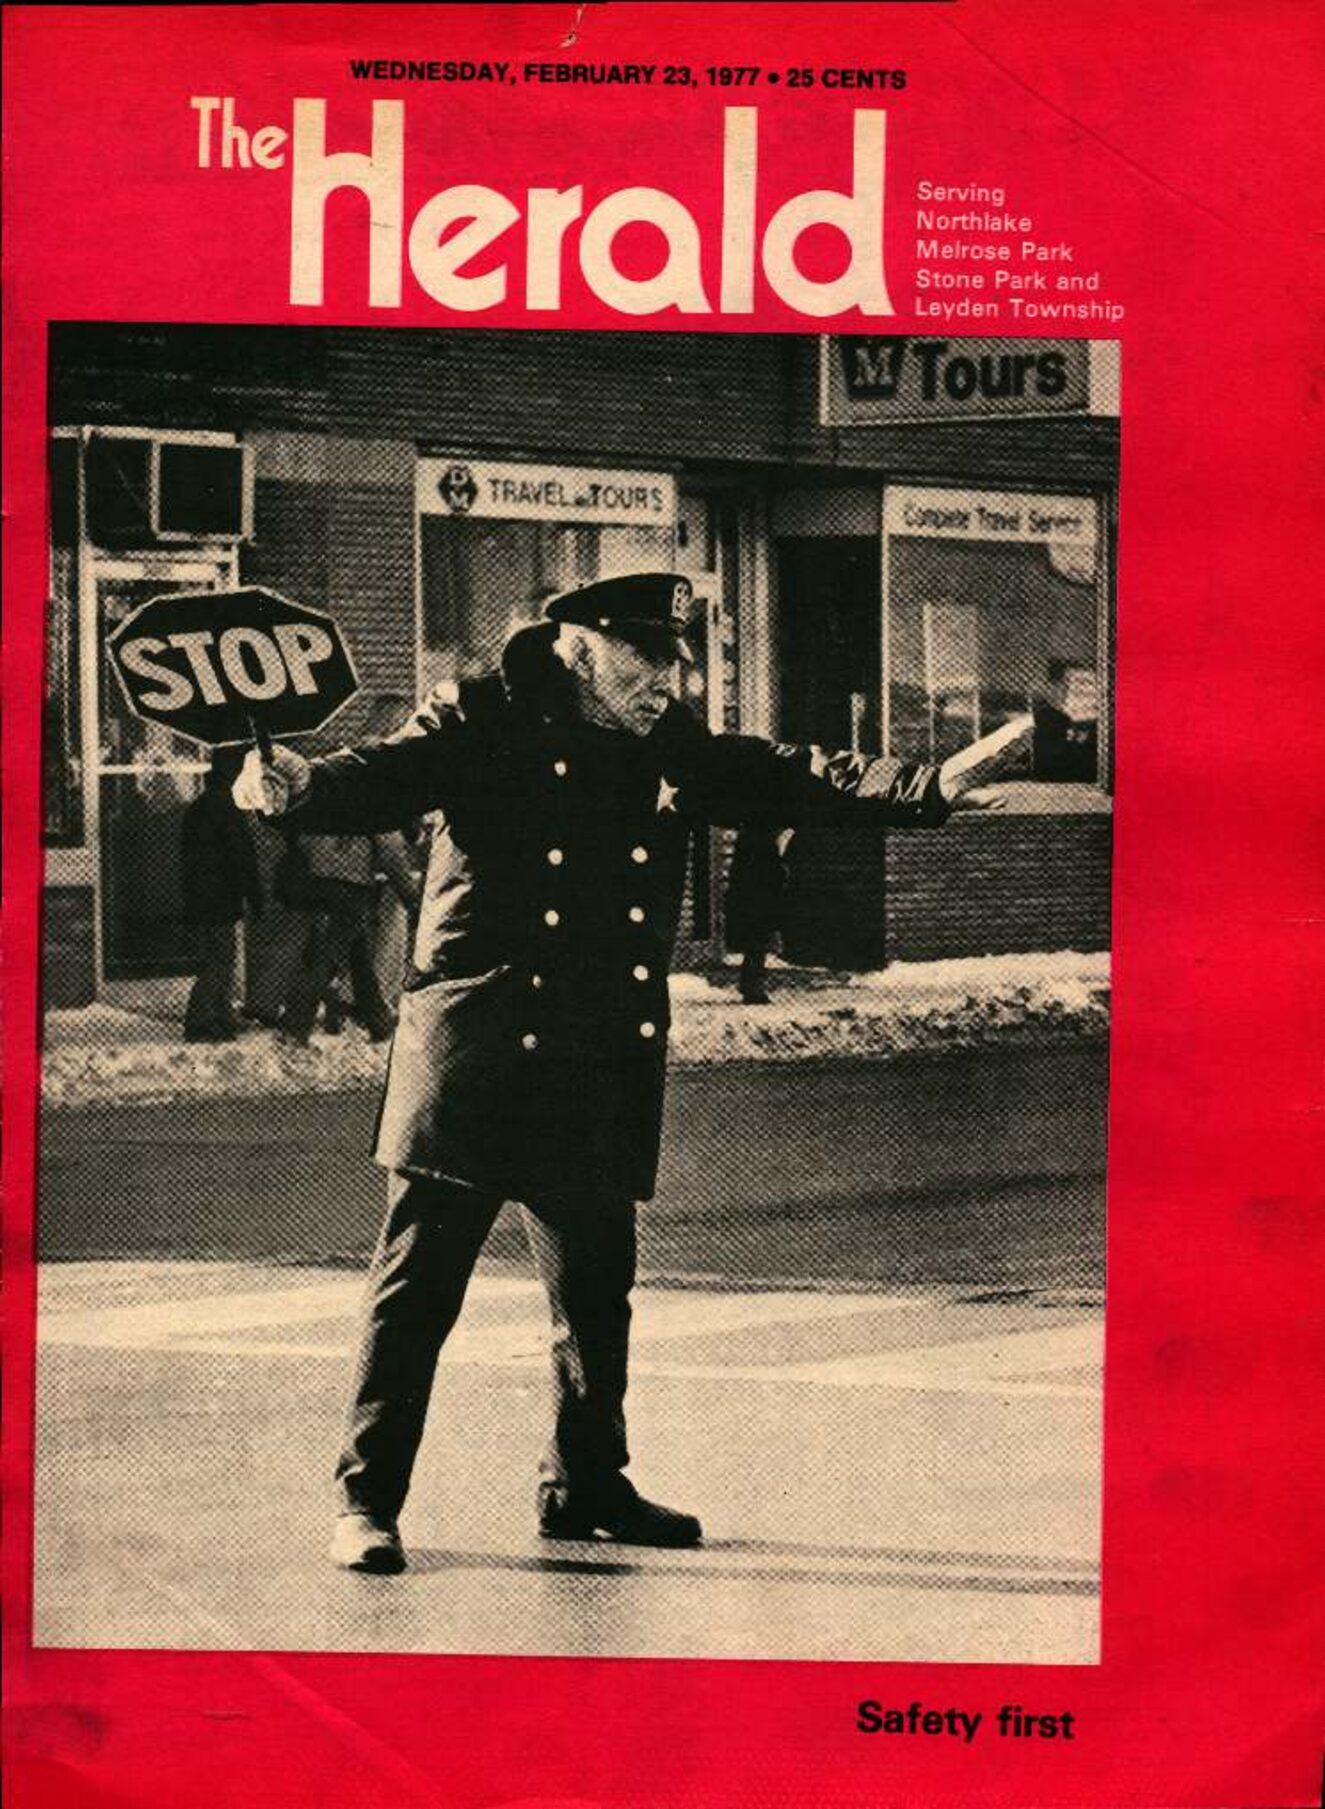 The Herald – 19770223